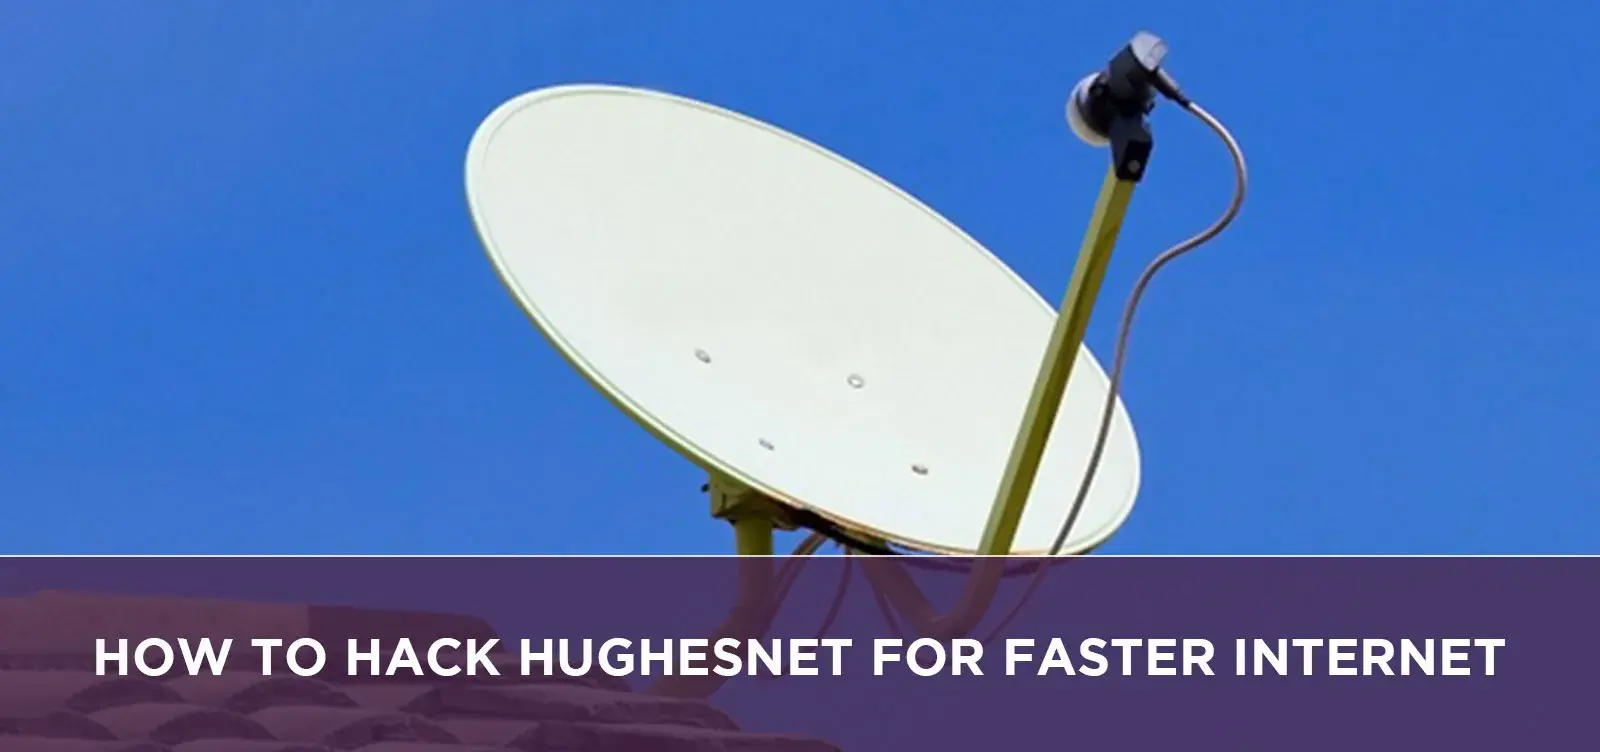 How To Hack Hughesnet For Faster Internet?